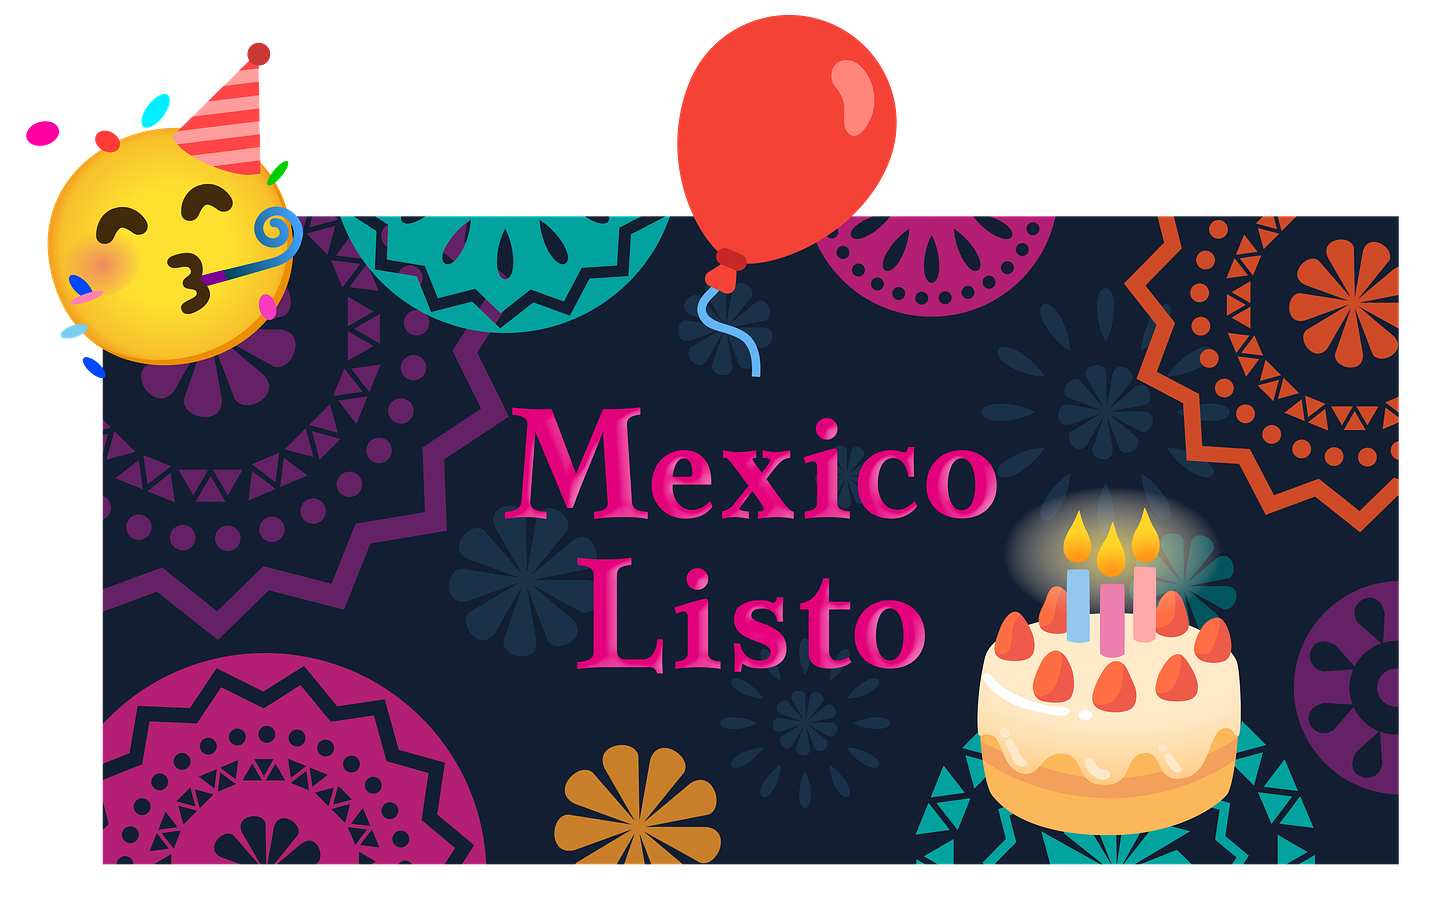 Mexico Listo logo adorned with birthday emojis